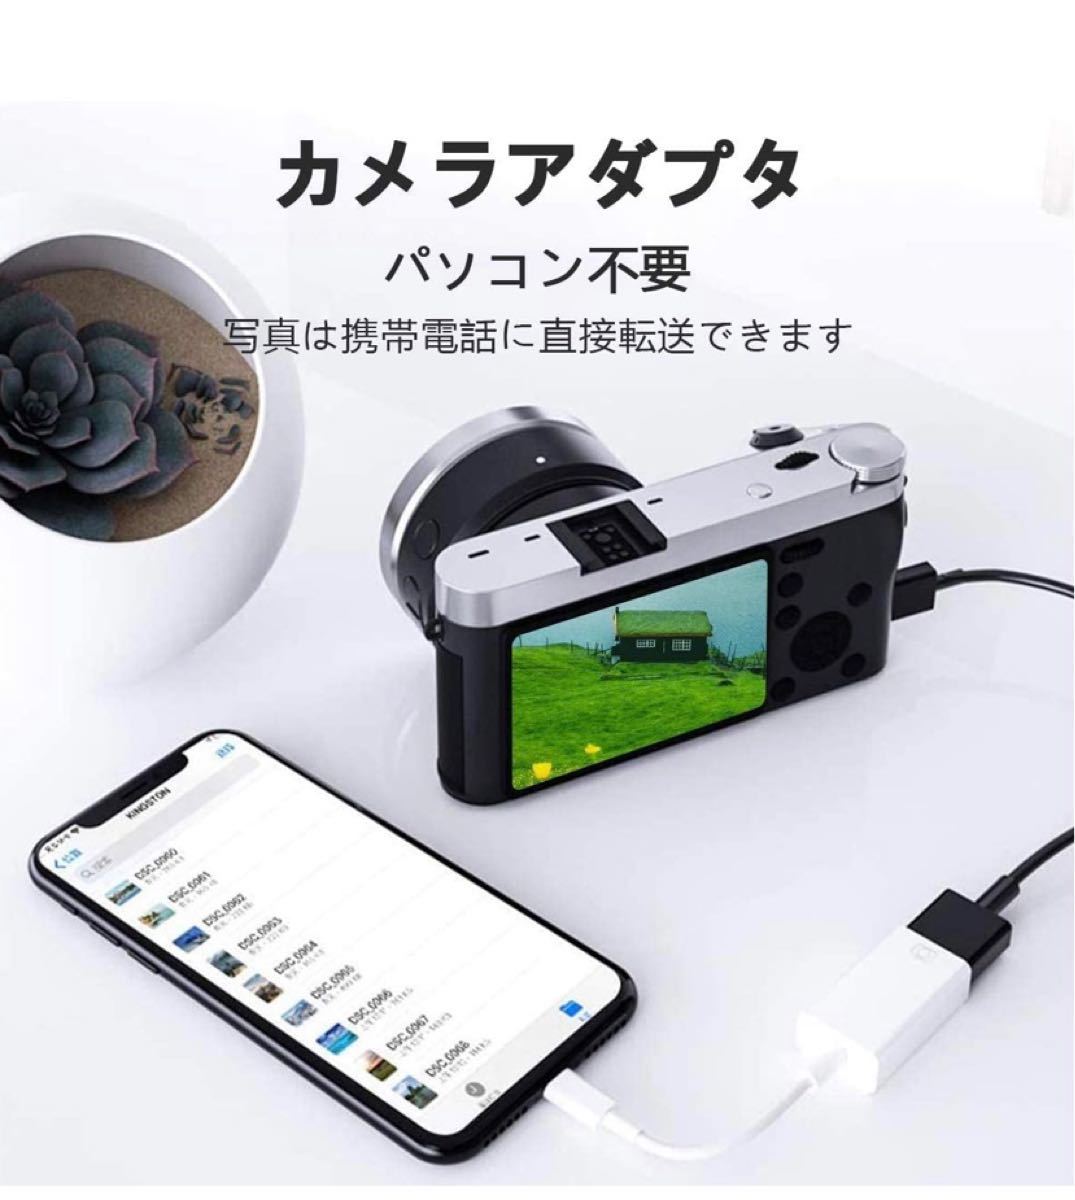 iphone/iPad/iPod 専用USB 変換 カメラアダプタ